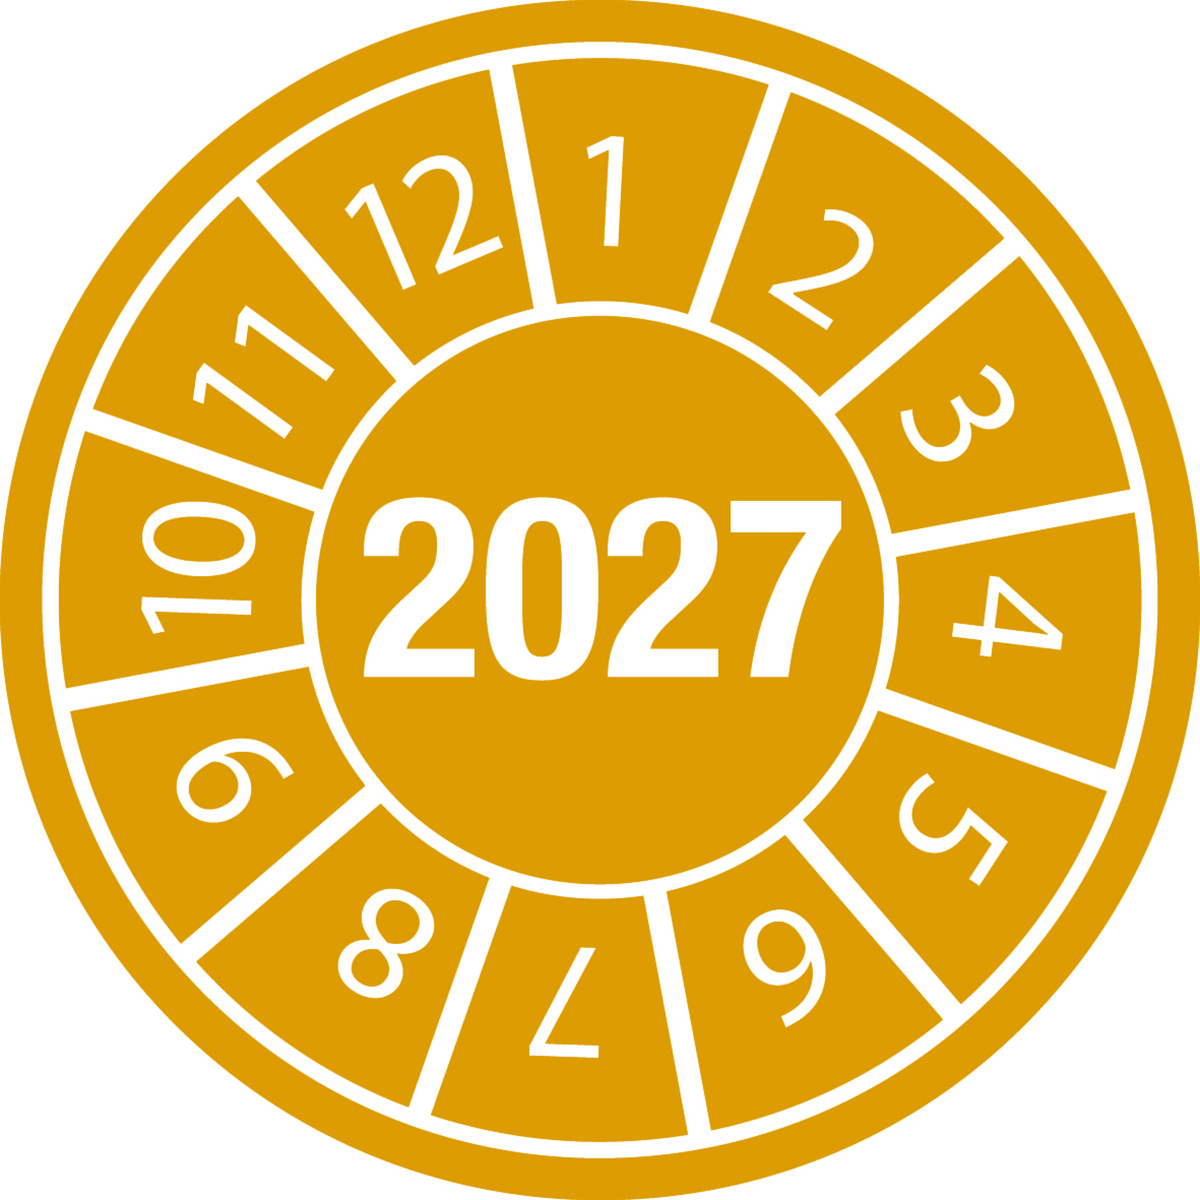 BRADY DATE 2027-DIA 15 B-500 DATE INSPECTION LBLS B-500 2027 - DIA 15 834115